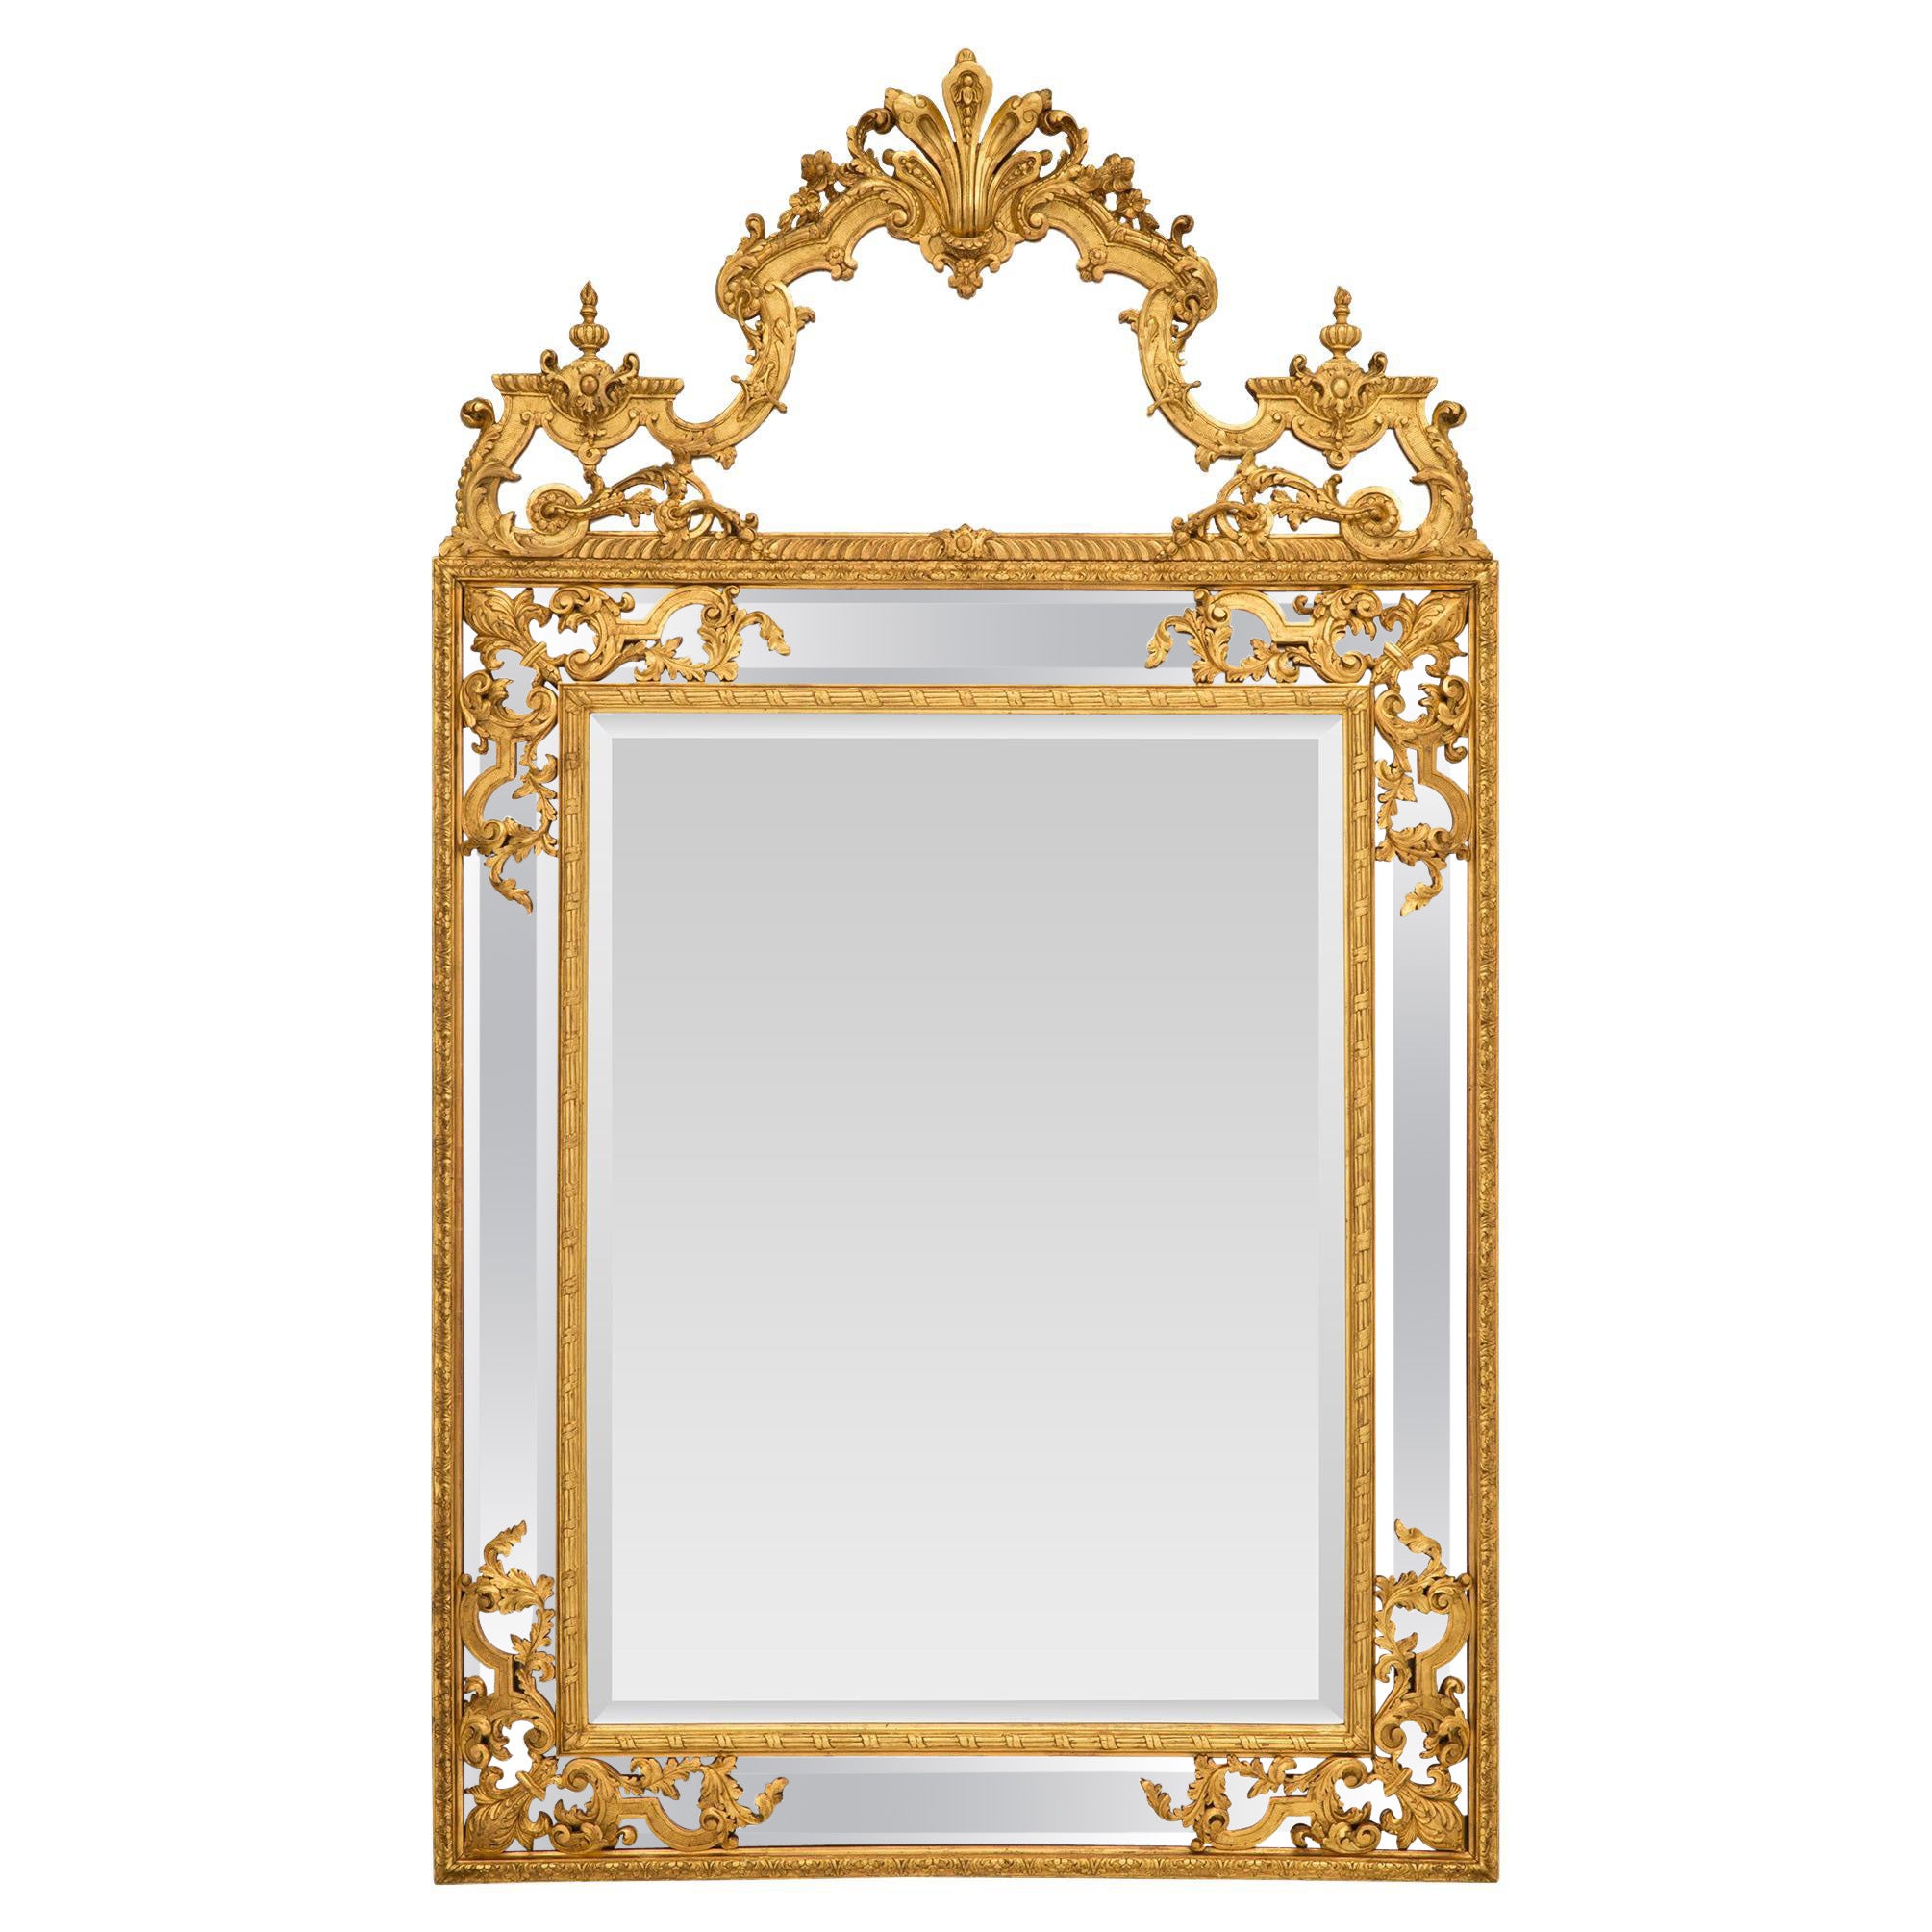 Französischer doppelt gerahmter Spiegel aus vergoldetem Holz im Regence-Stil